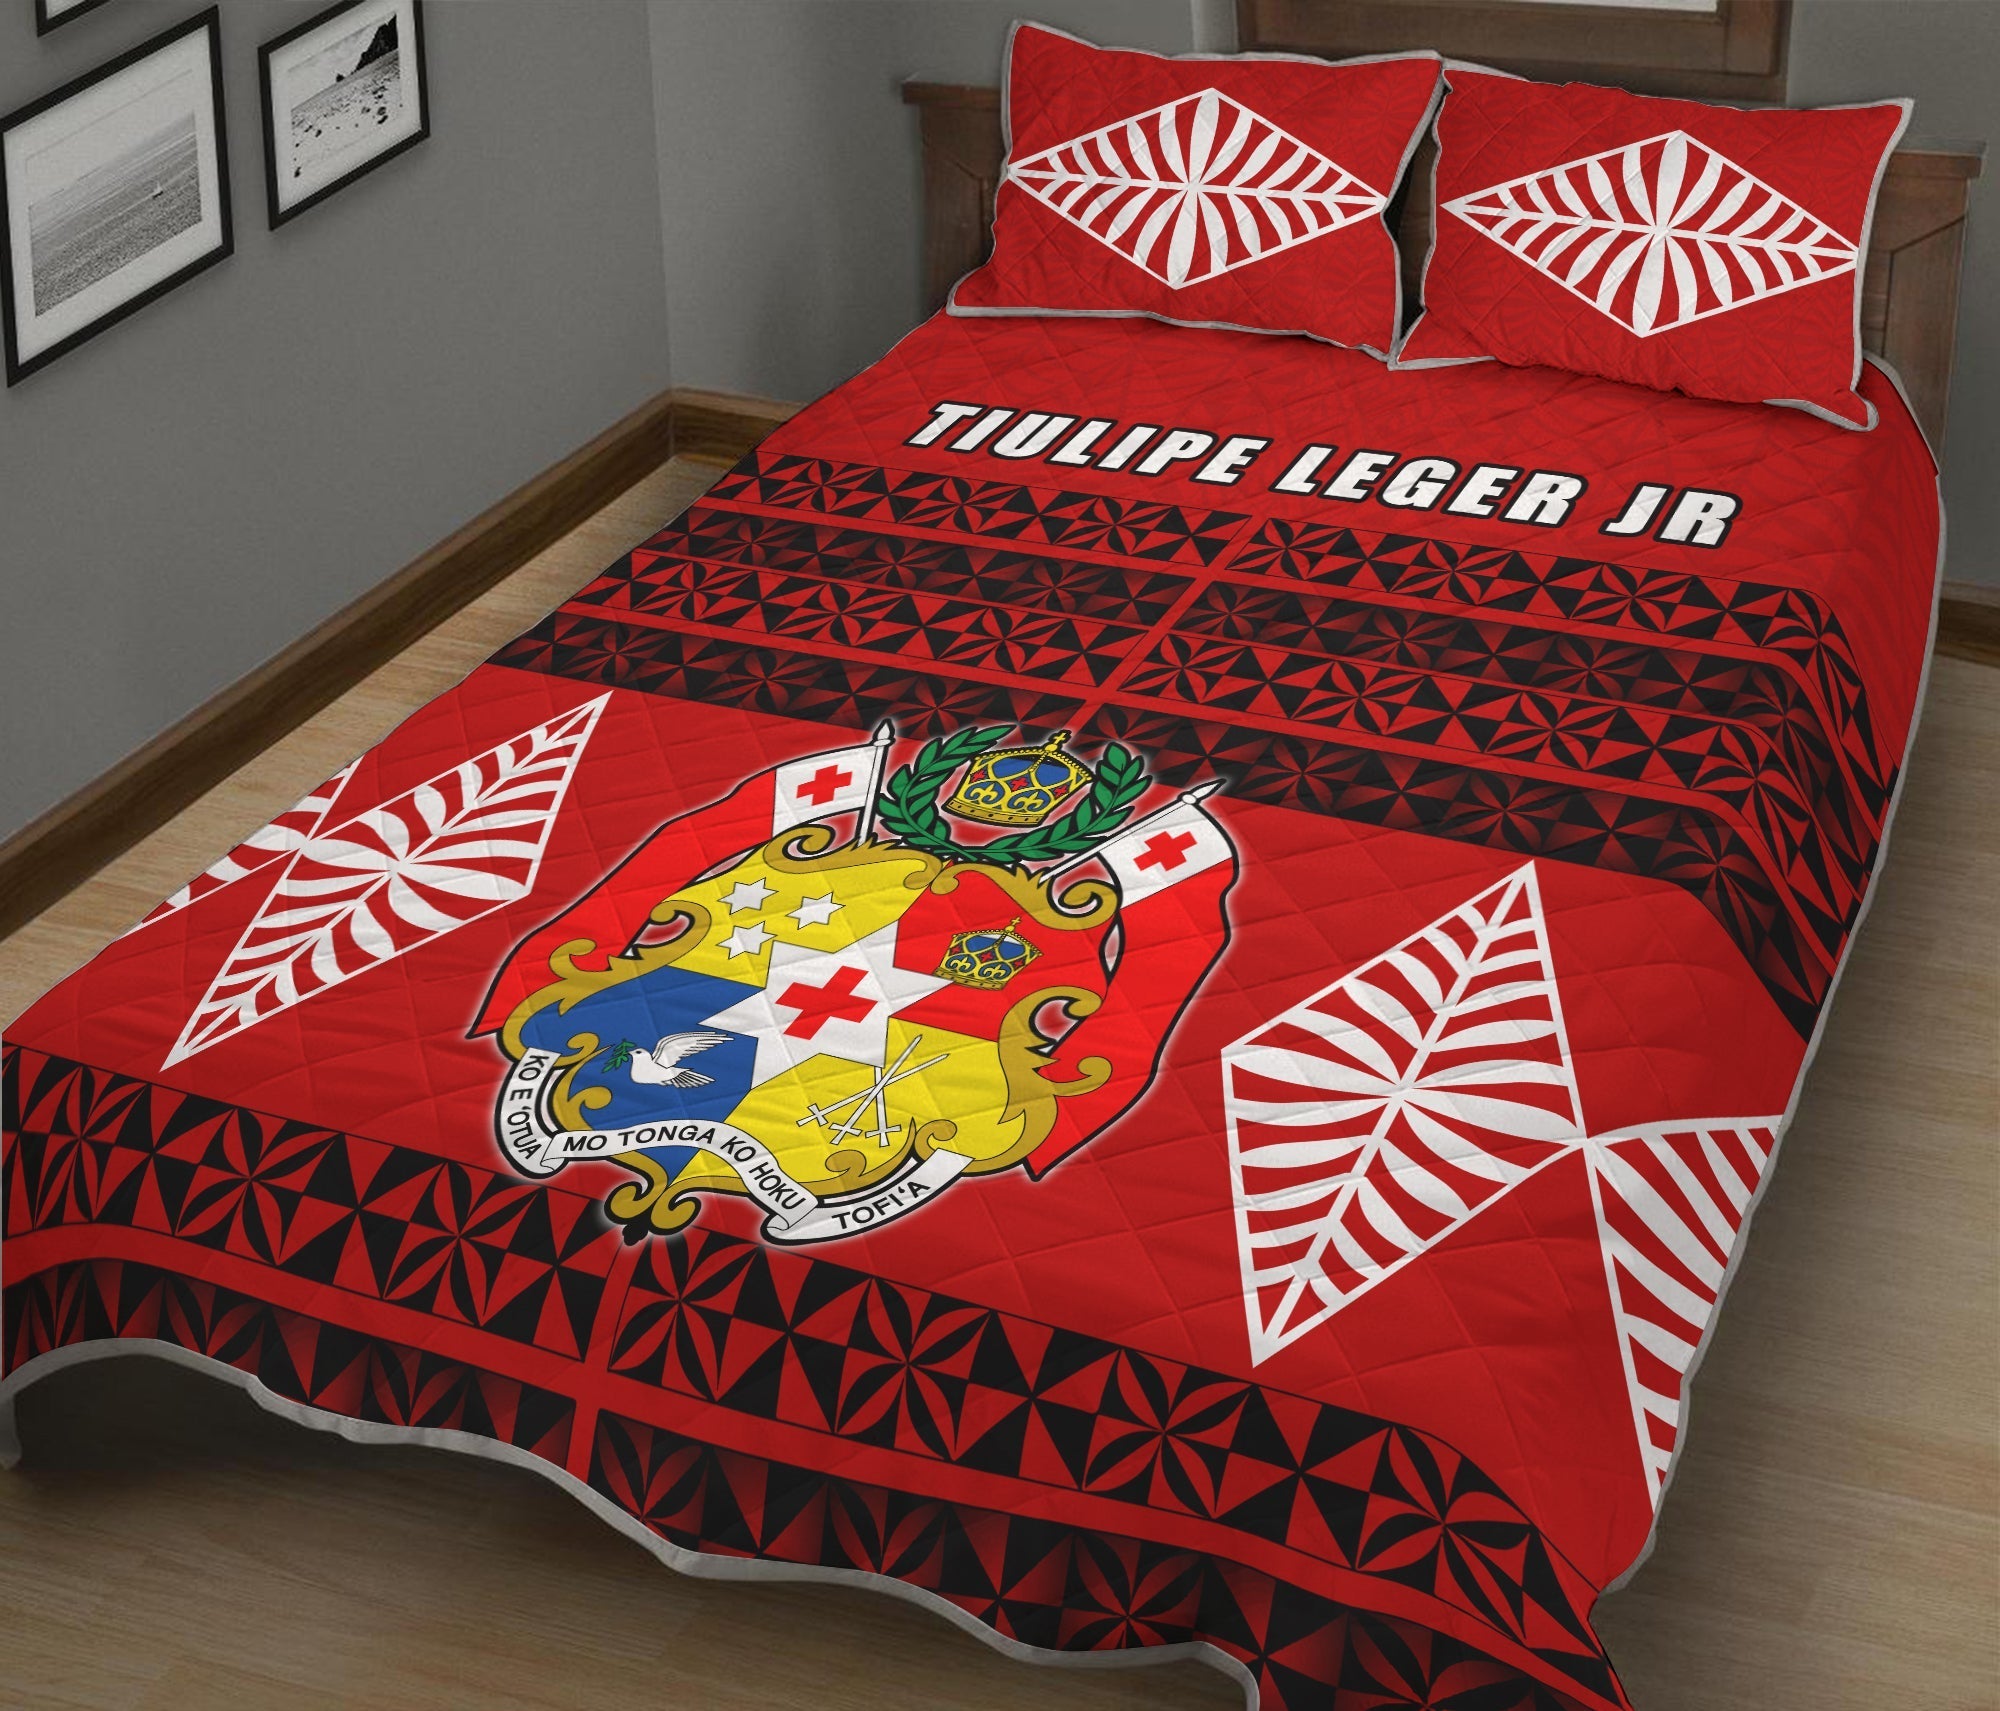 tiulipe-leger-jr-tonga-quilt-bed-set-tongan-pattern